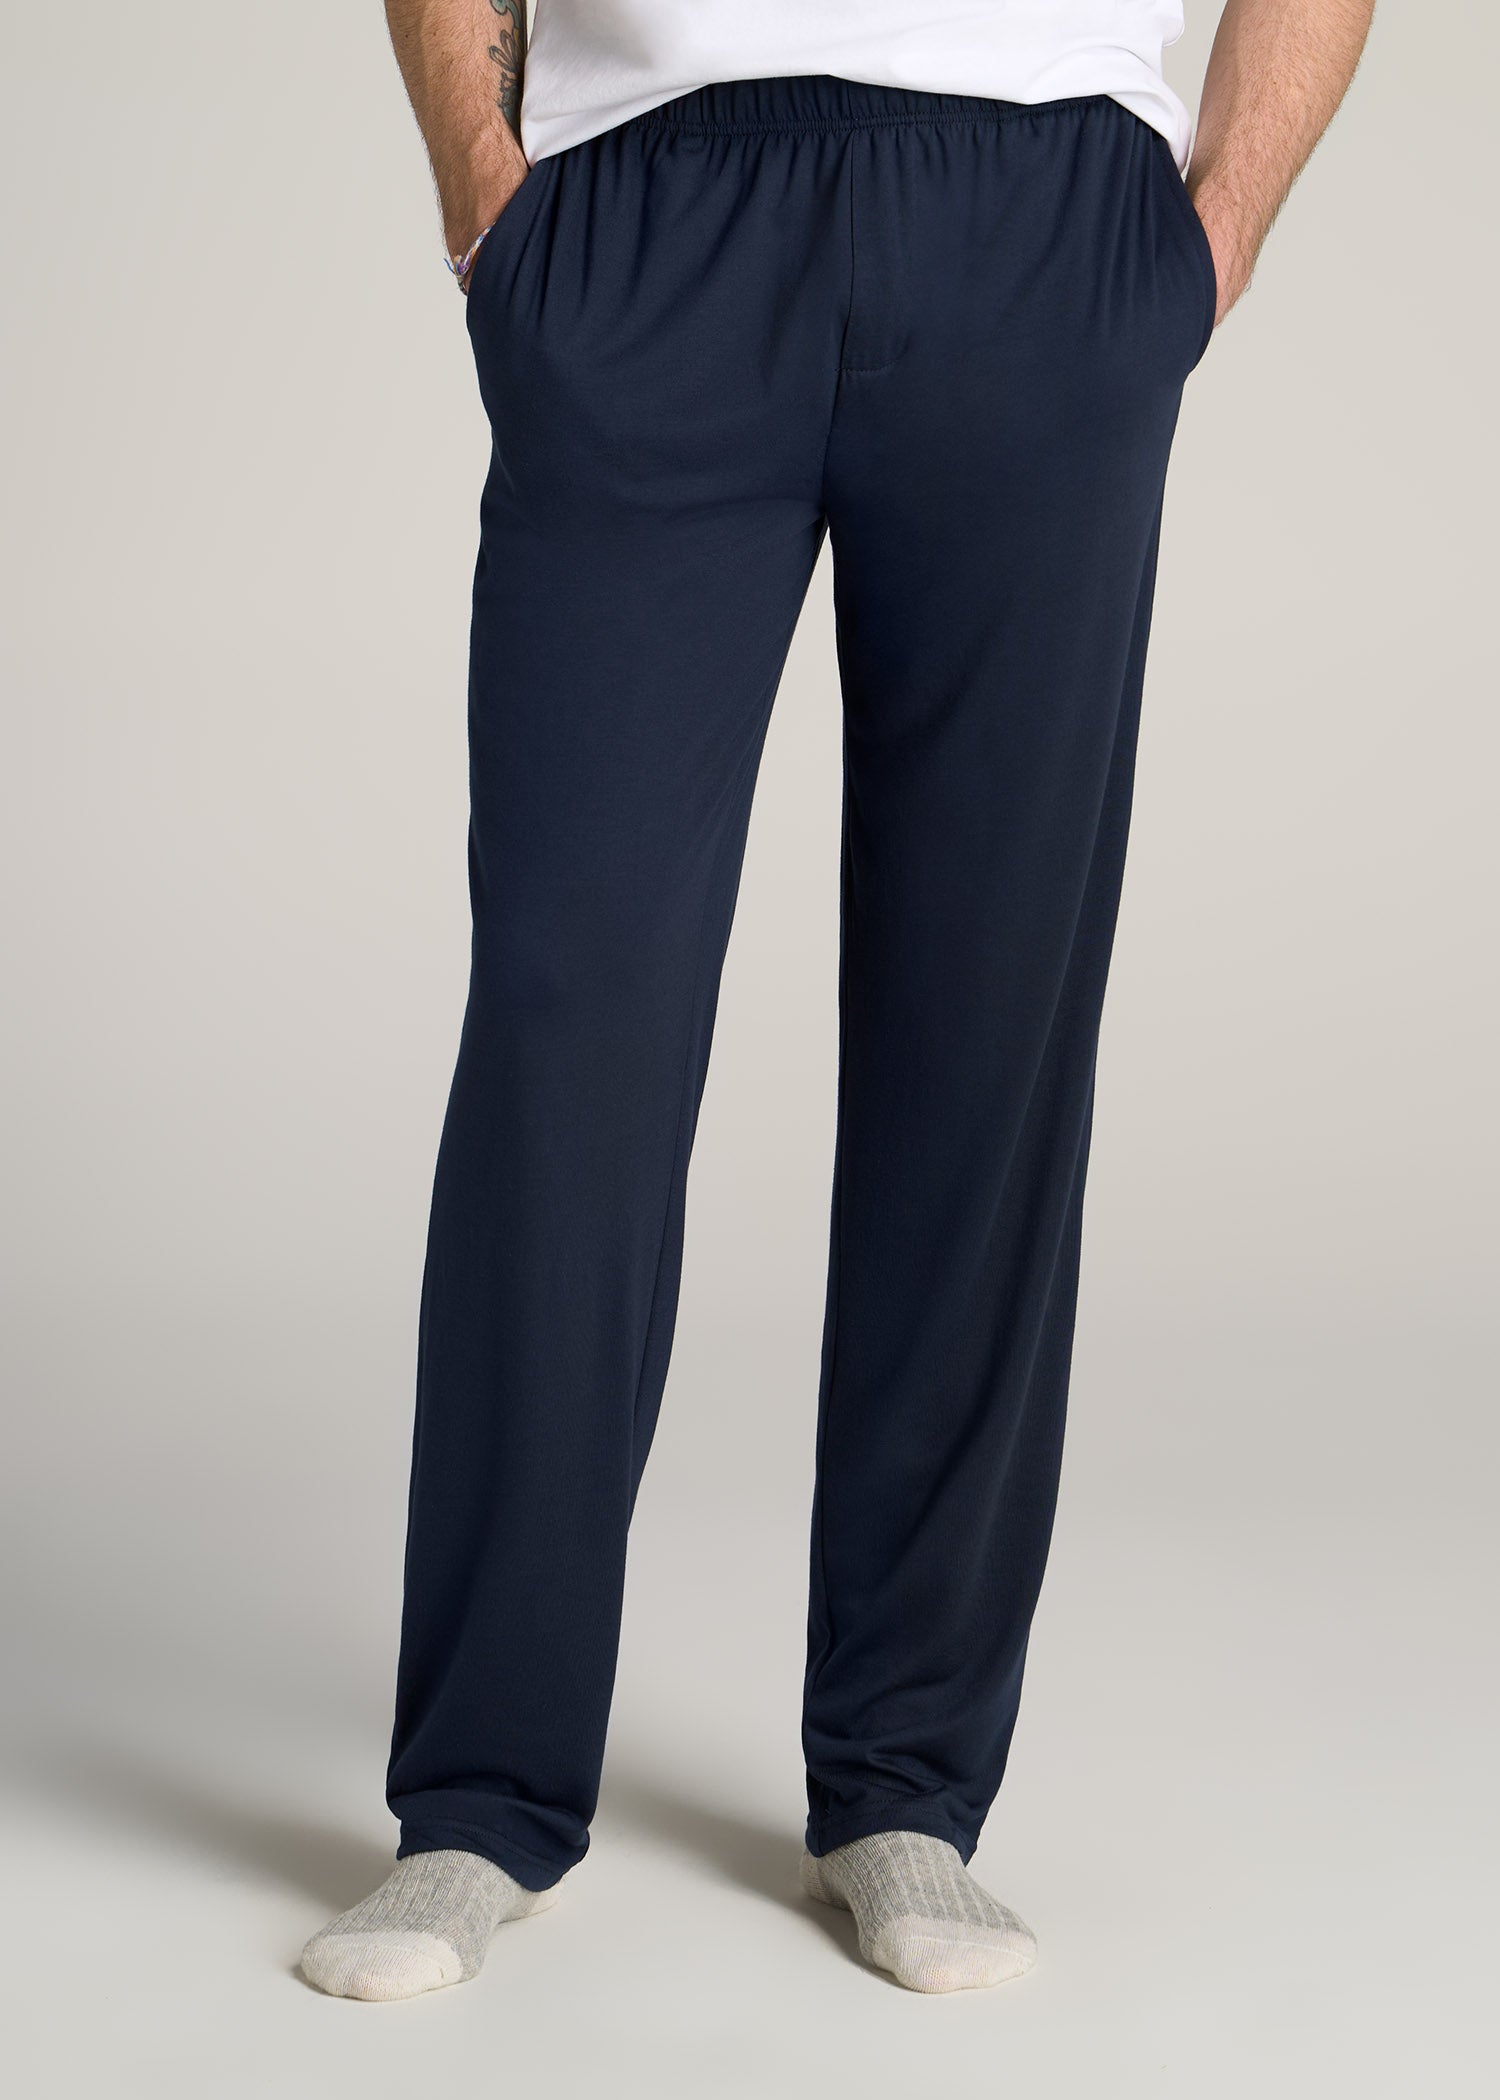 Haband Men's Jersey Comfort Pants, Elastic Cuff